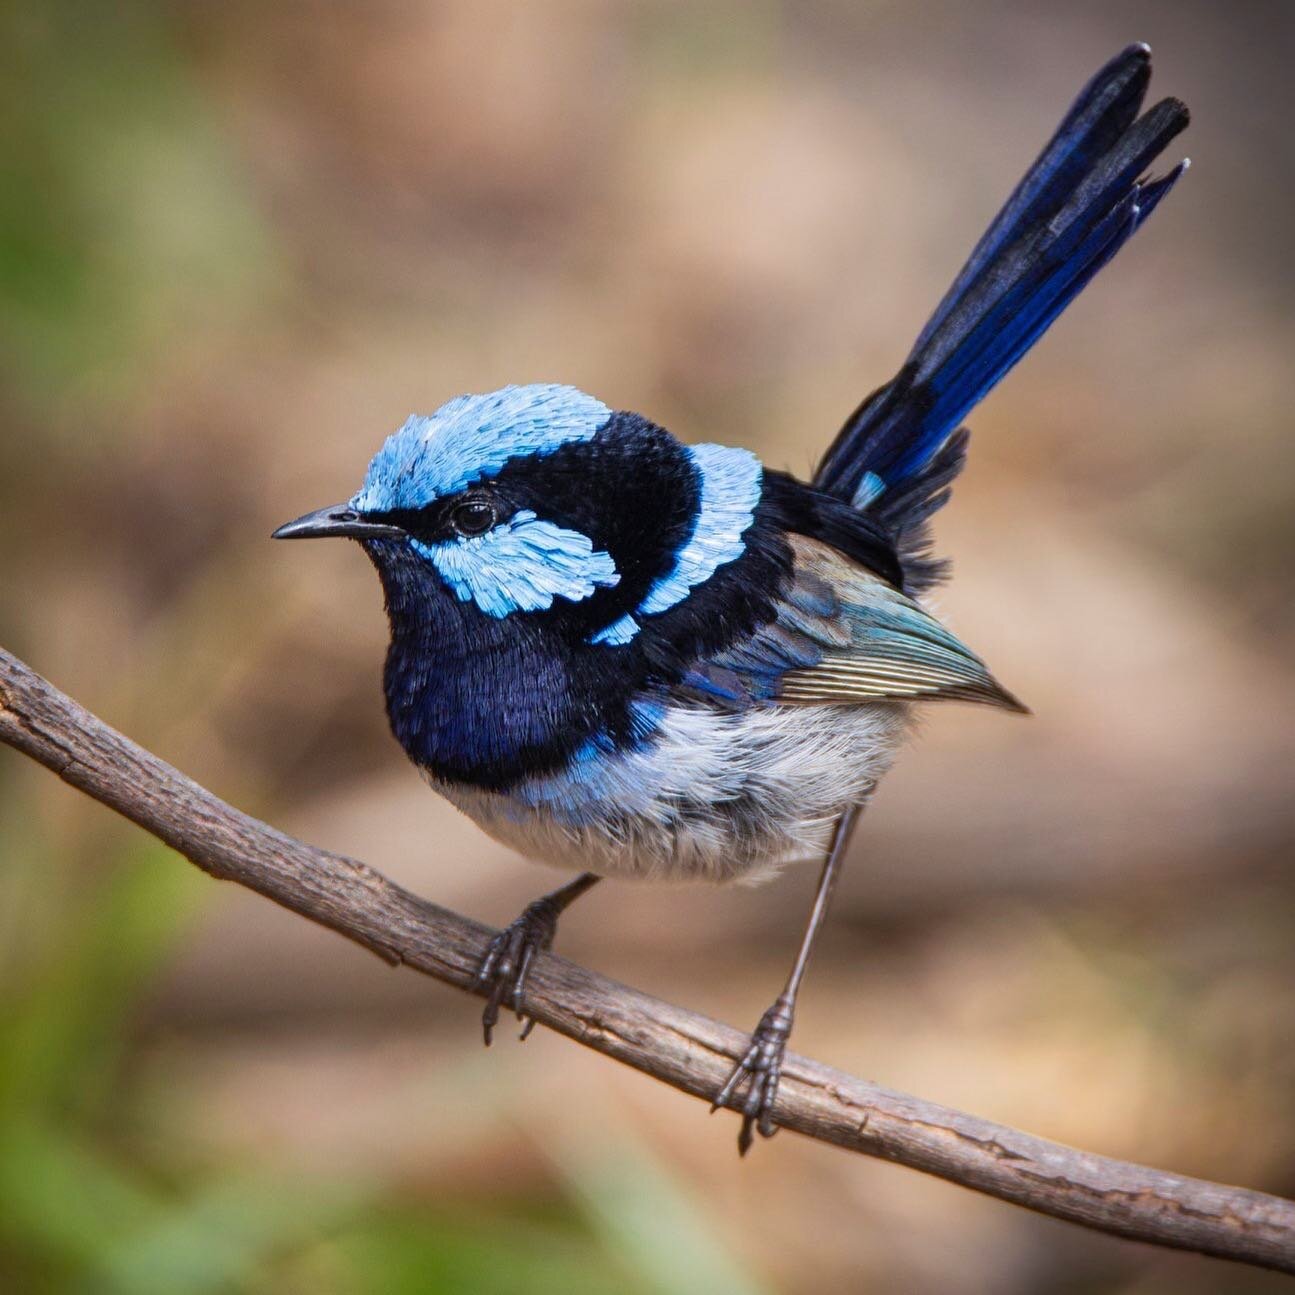 ❤️A BLUE WREN.
#bluewren #birds #birdphotography #wildlife #australia #camera #biglens #birding #zoom